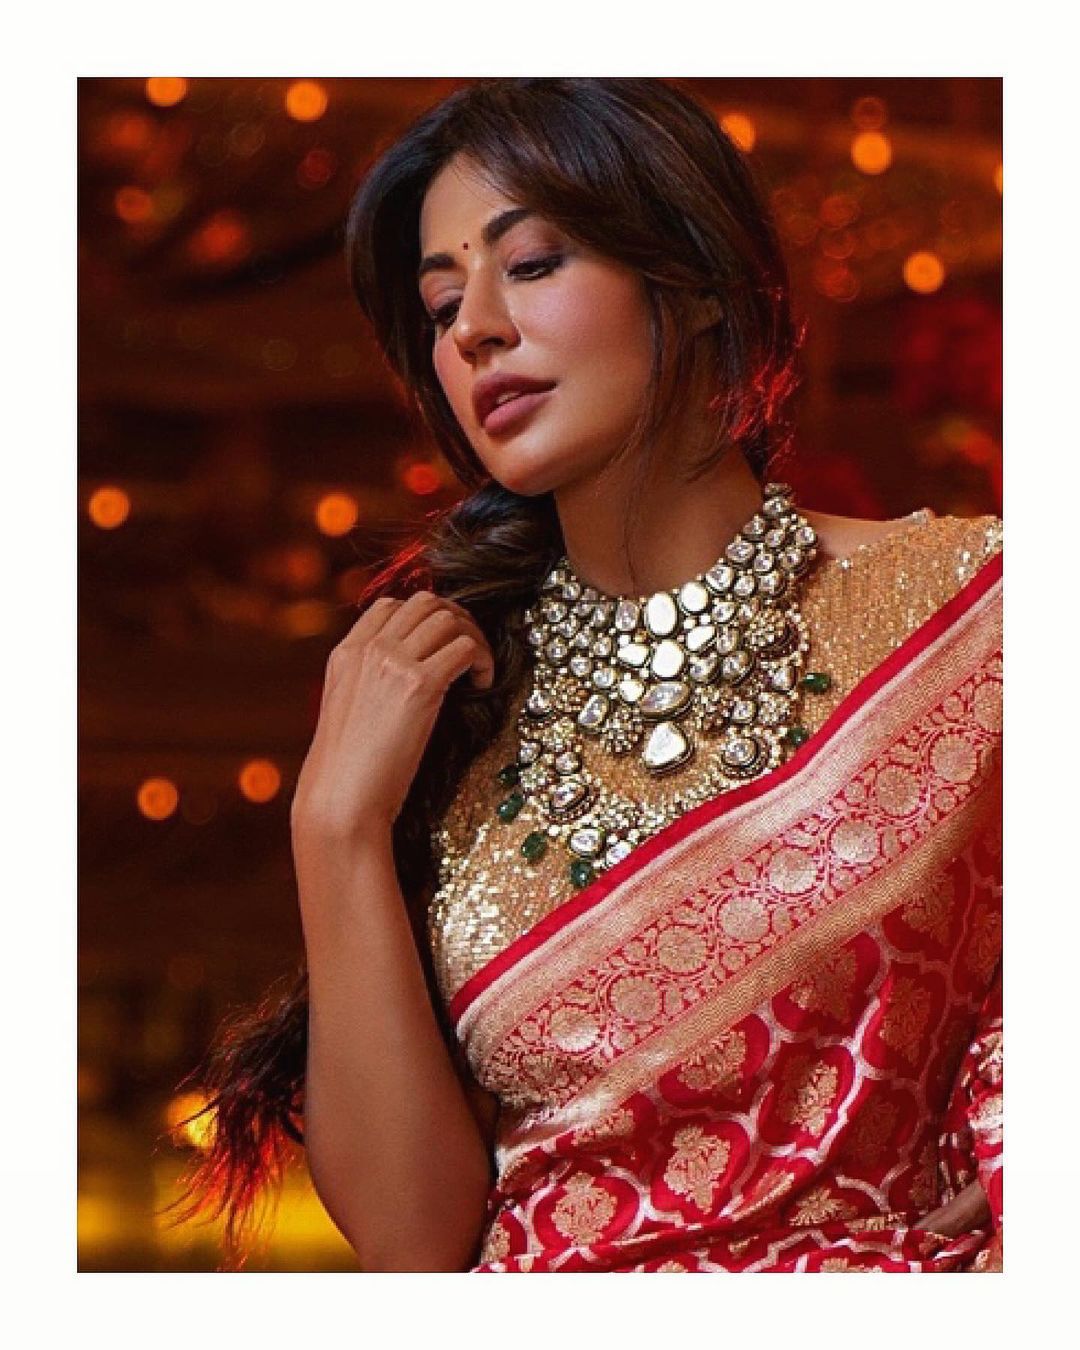 Chitrangda Singh looks breathtaking in the ornate neckpiece and saree. 